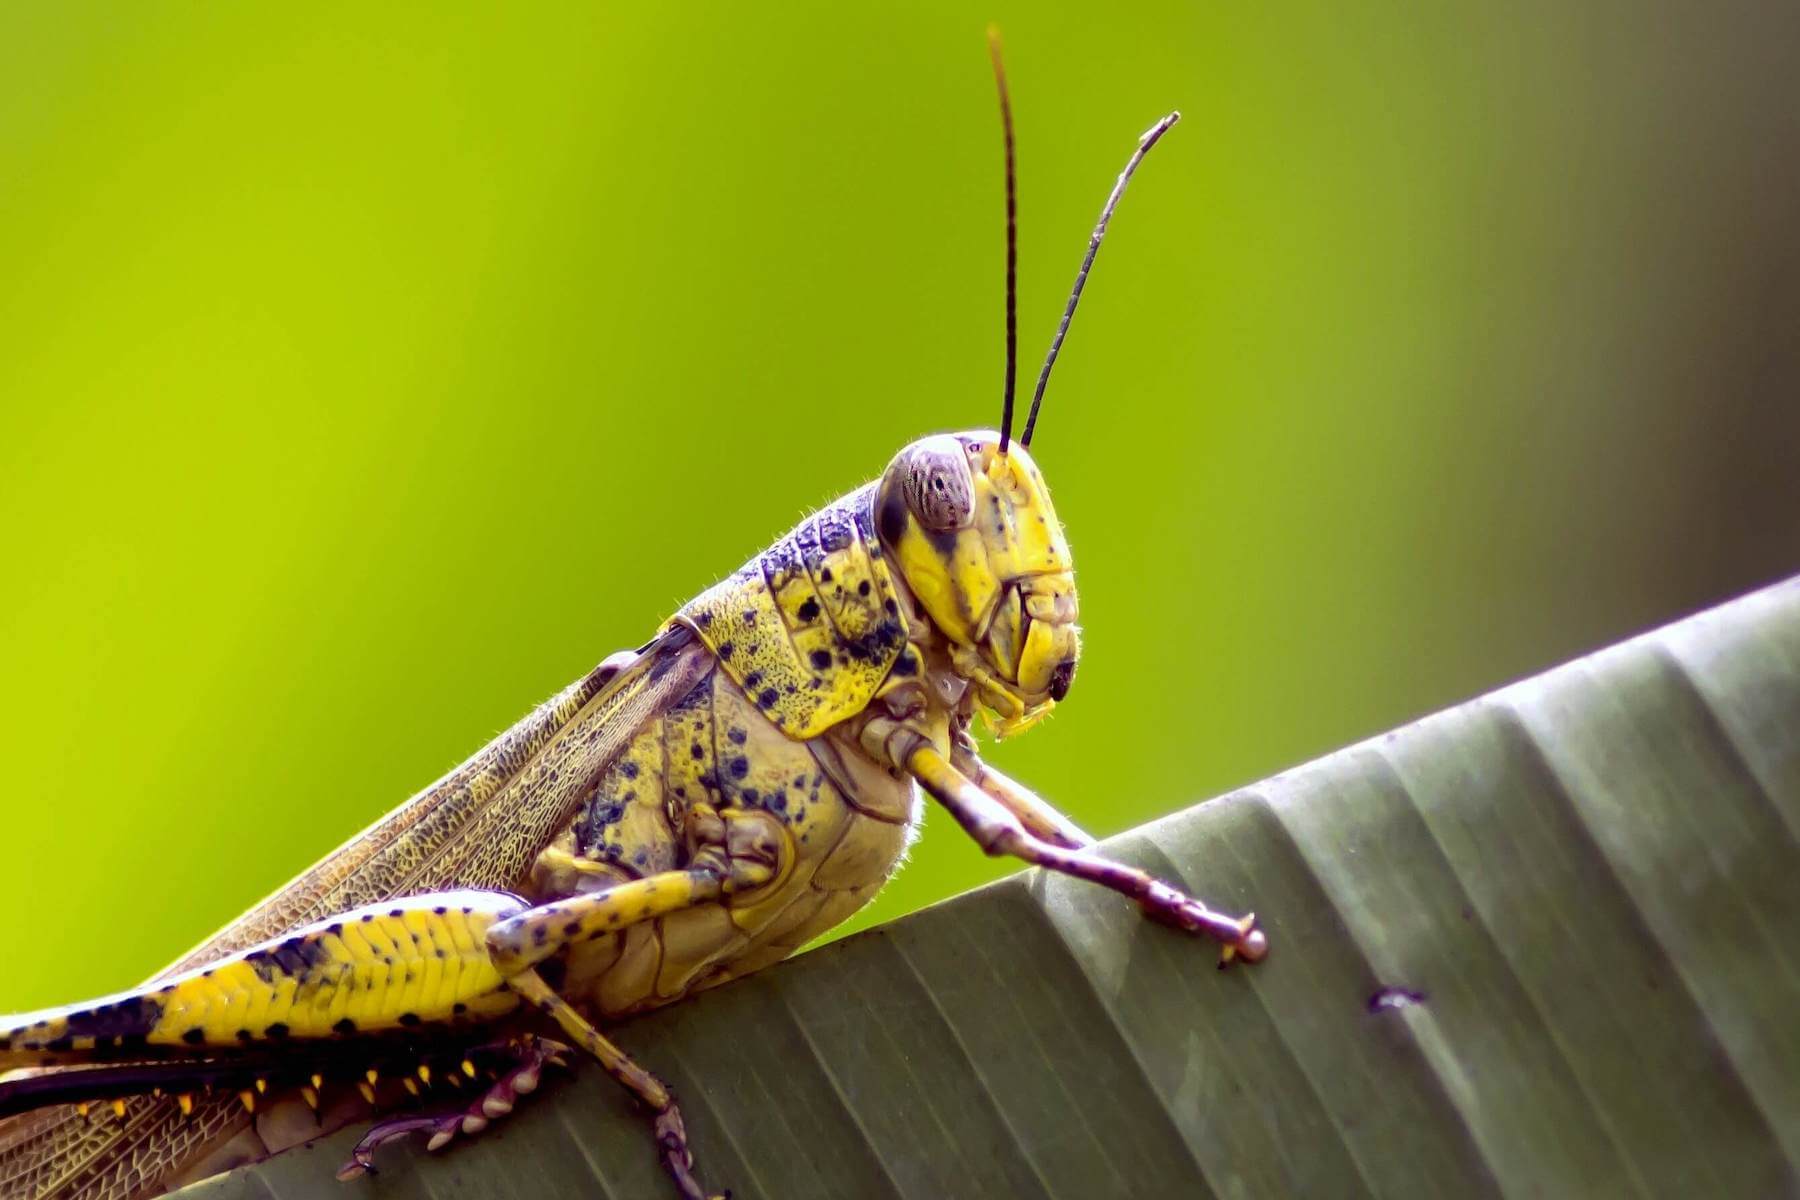 Image of yellow cricket